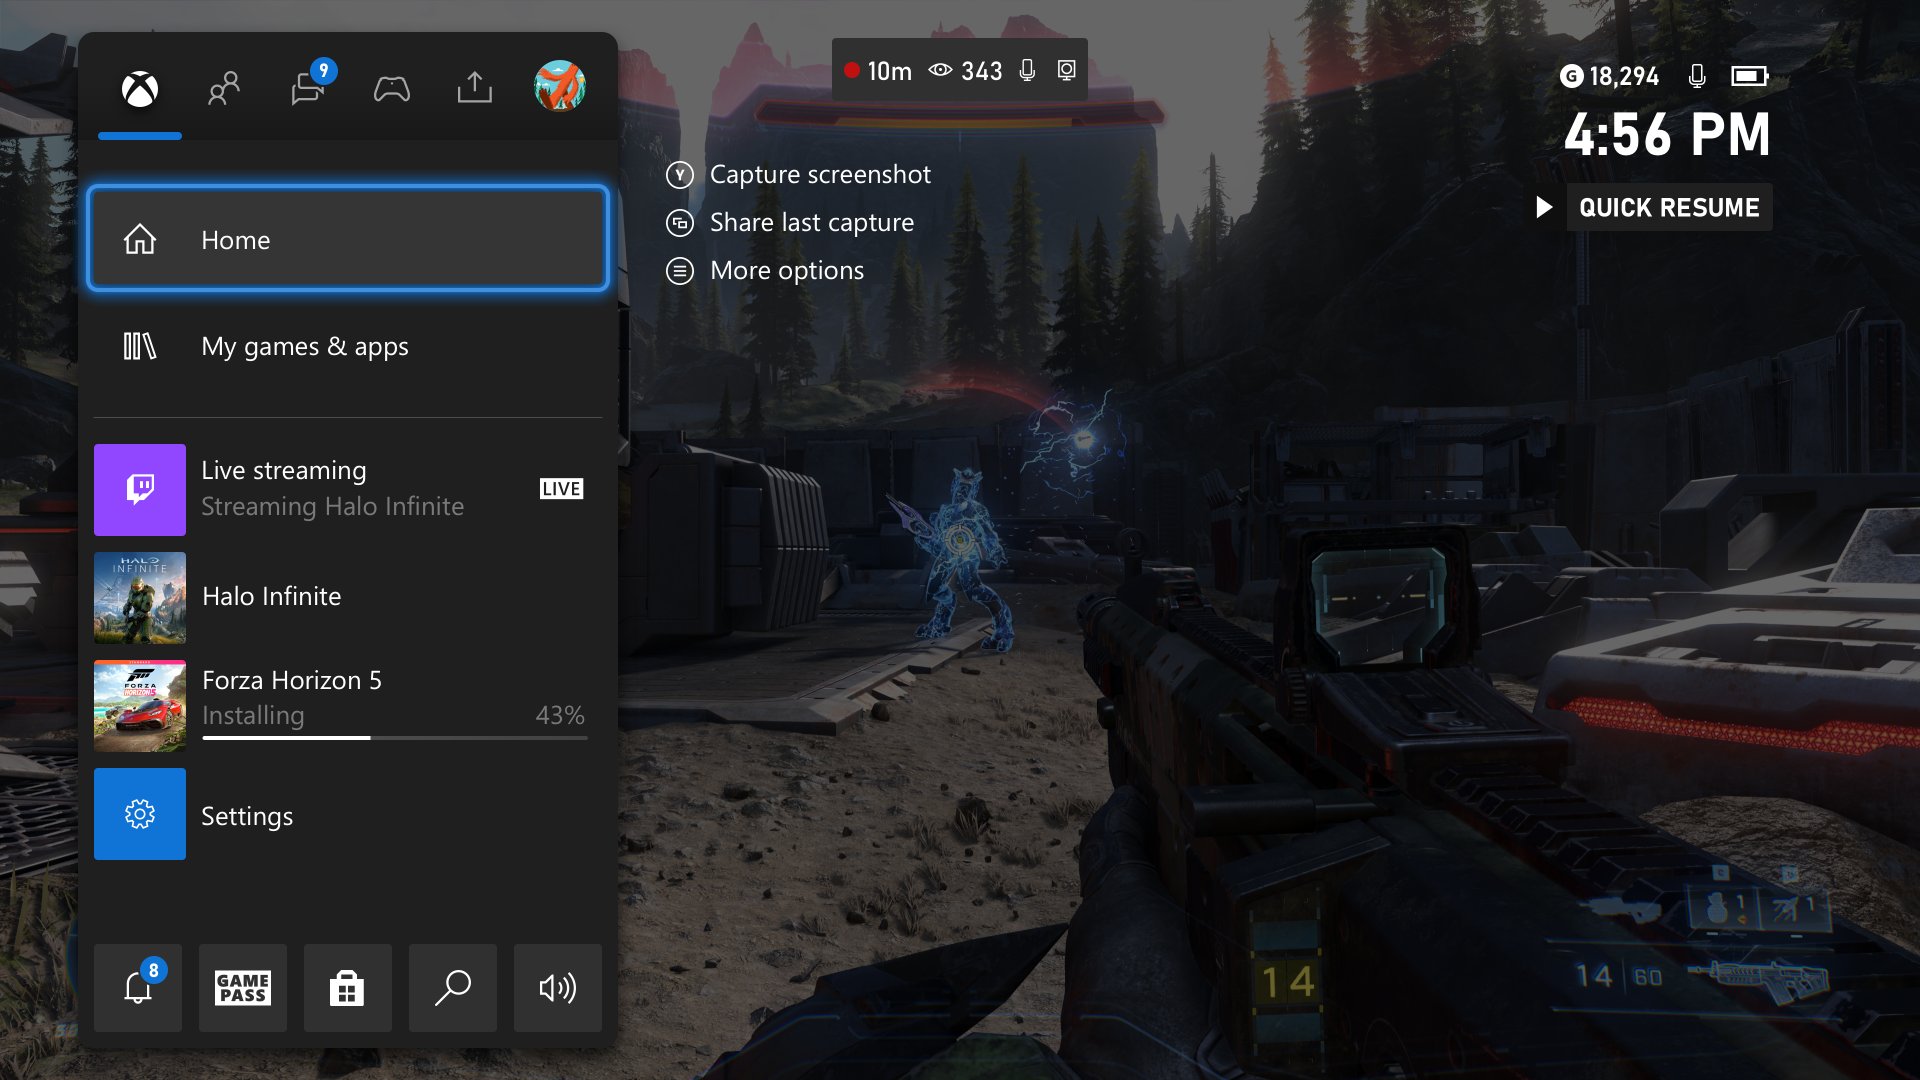 bom wat betreft Trekker Microsoft brings back Twitch streaming integration directly into the Xbox  dashboard | TechCrunch